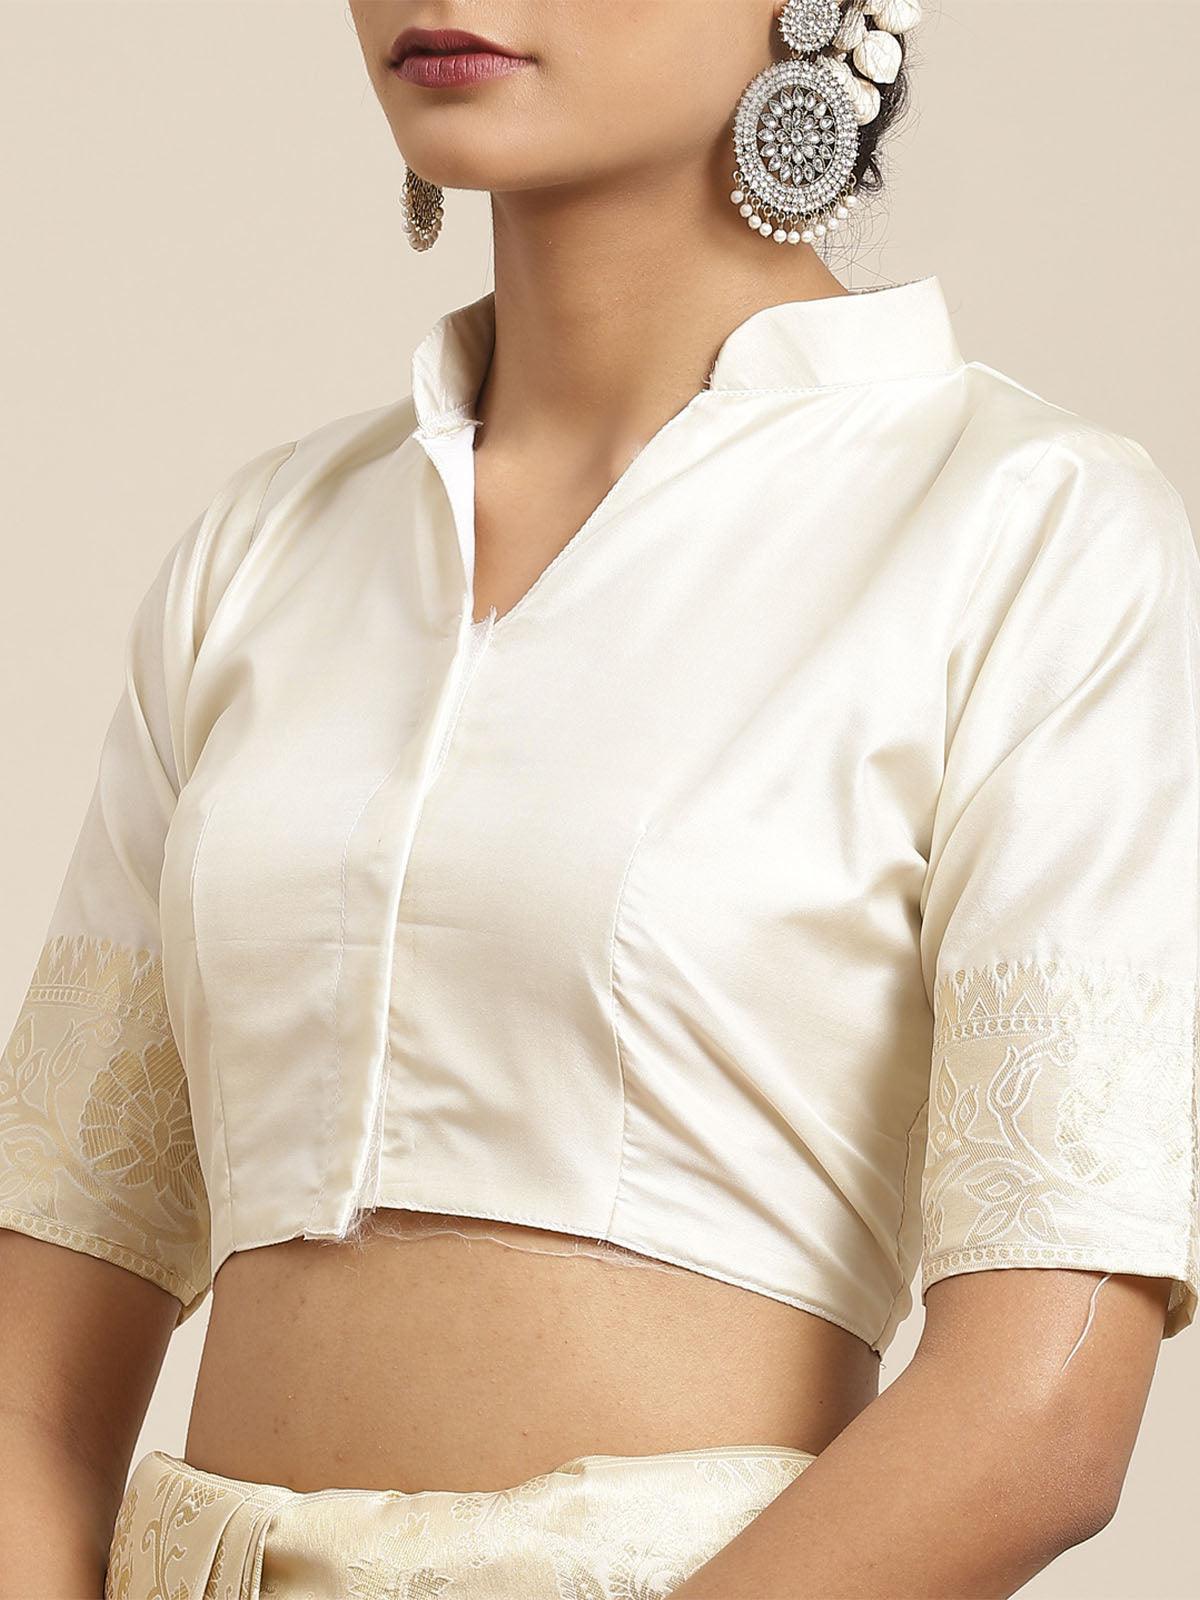 Women's Kanjeevaram Silk Cream Woven Design Woven saree With Blouse Piece - Odette